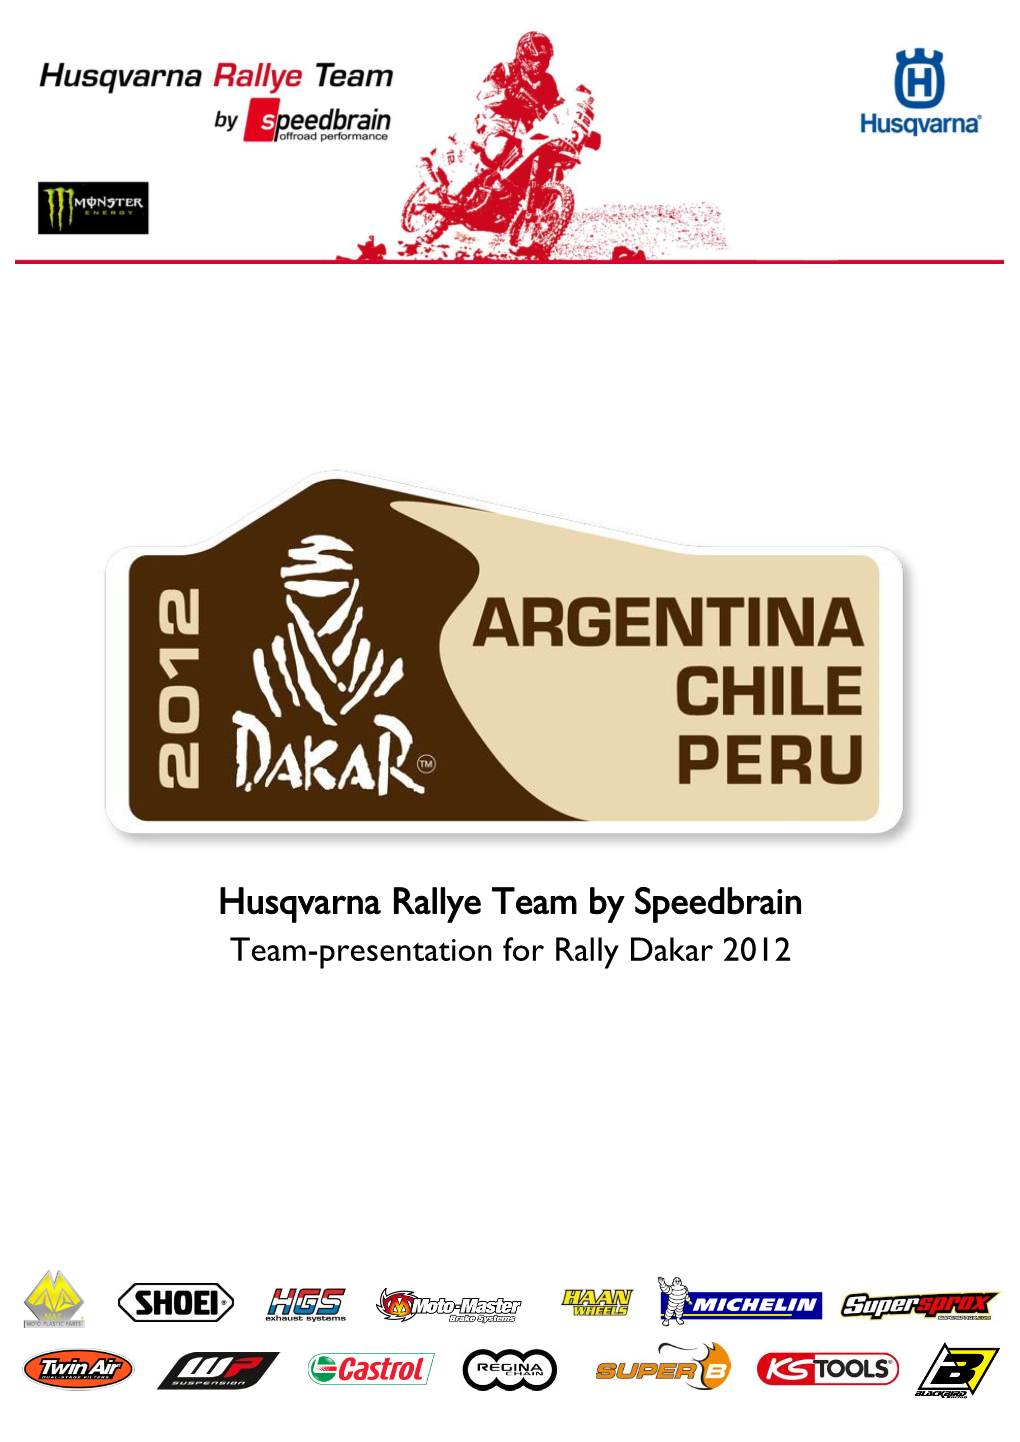 Husqvarna Rallye Team by Speedbrain Team-Presentation for Rally Dakar 2012